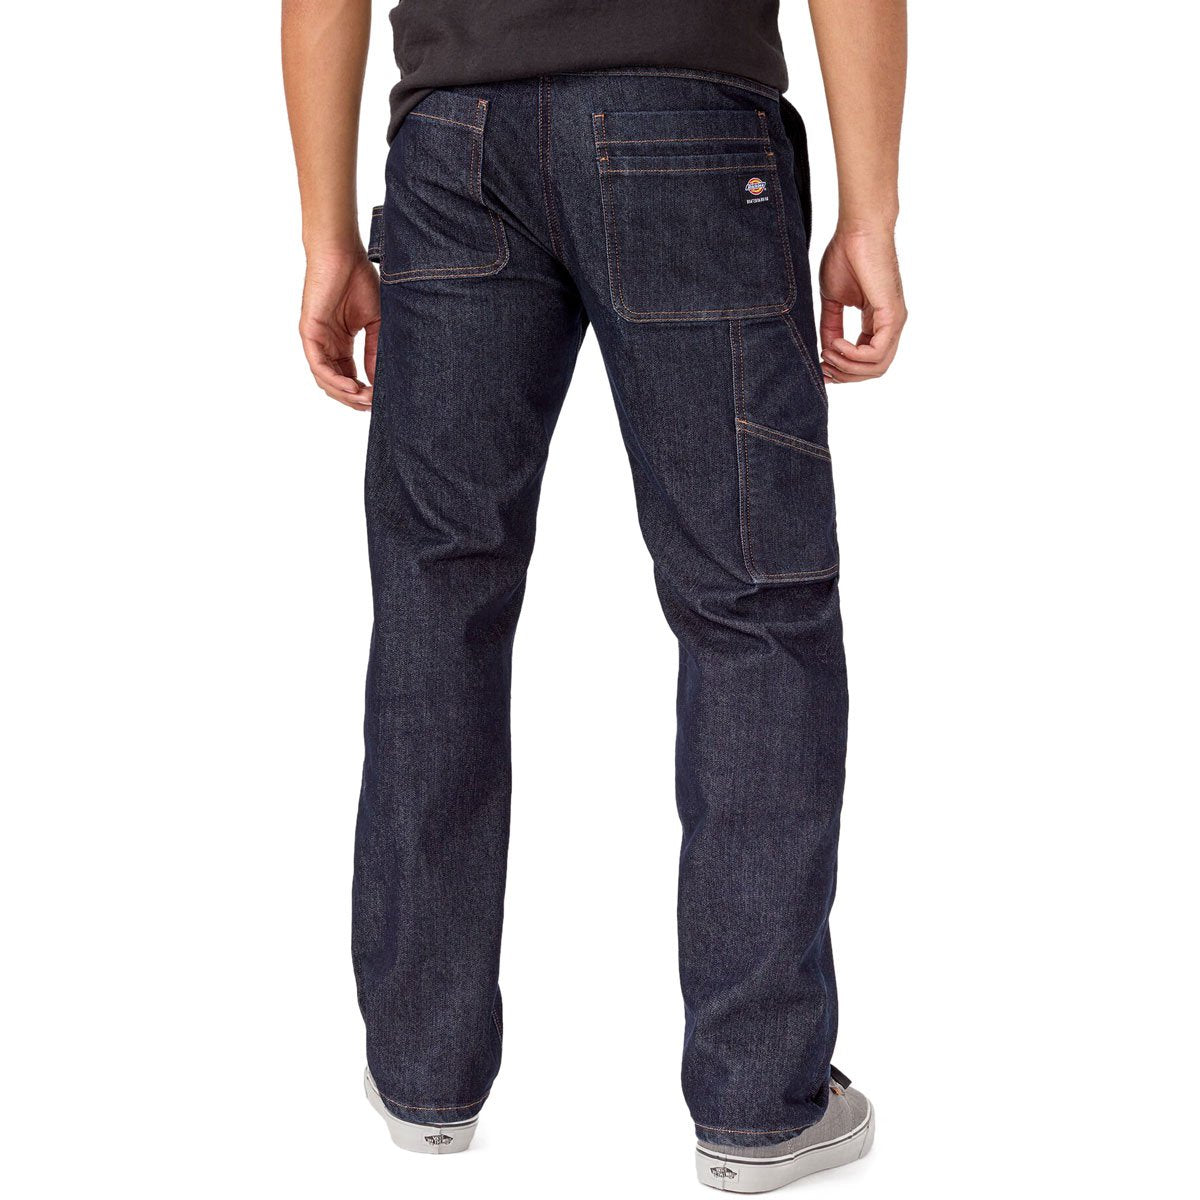 Dickies Denim Utility Jeans - Rinsed Indigo Blue image 2